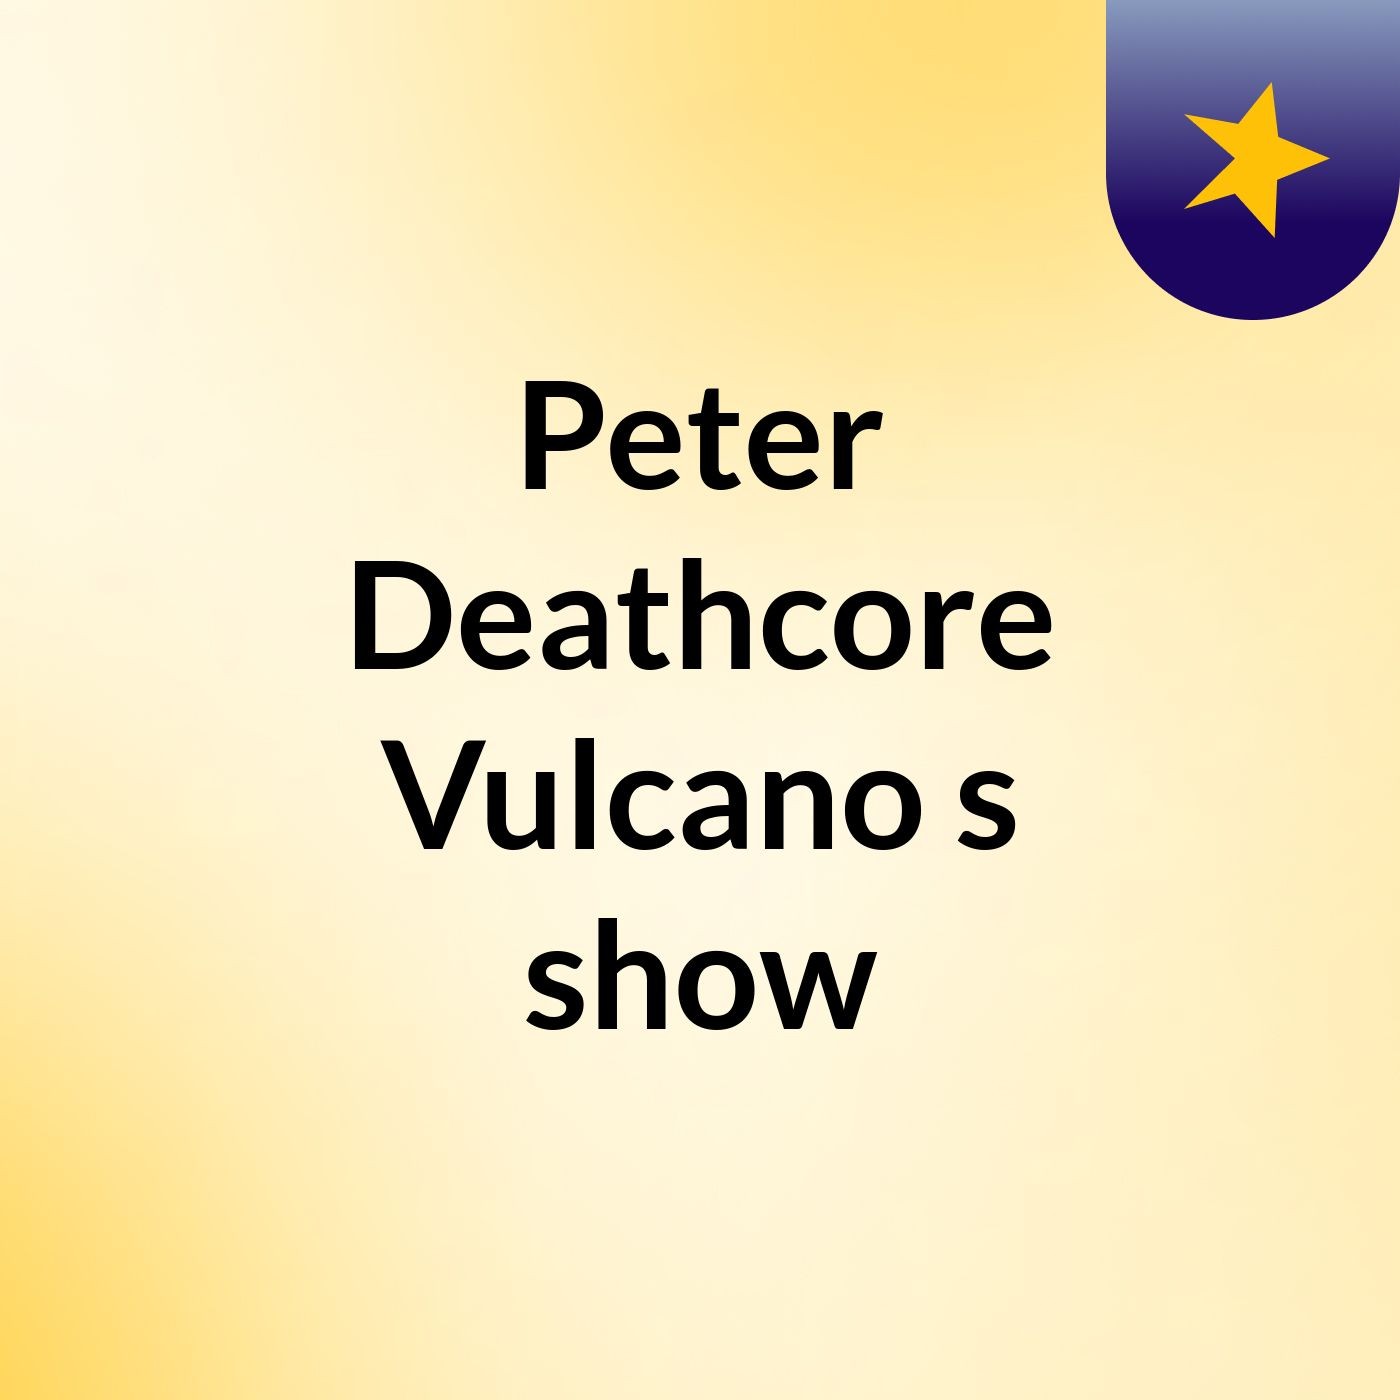 Peter Deathcore Vulcano's show